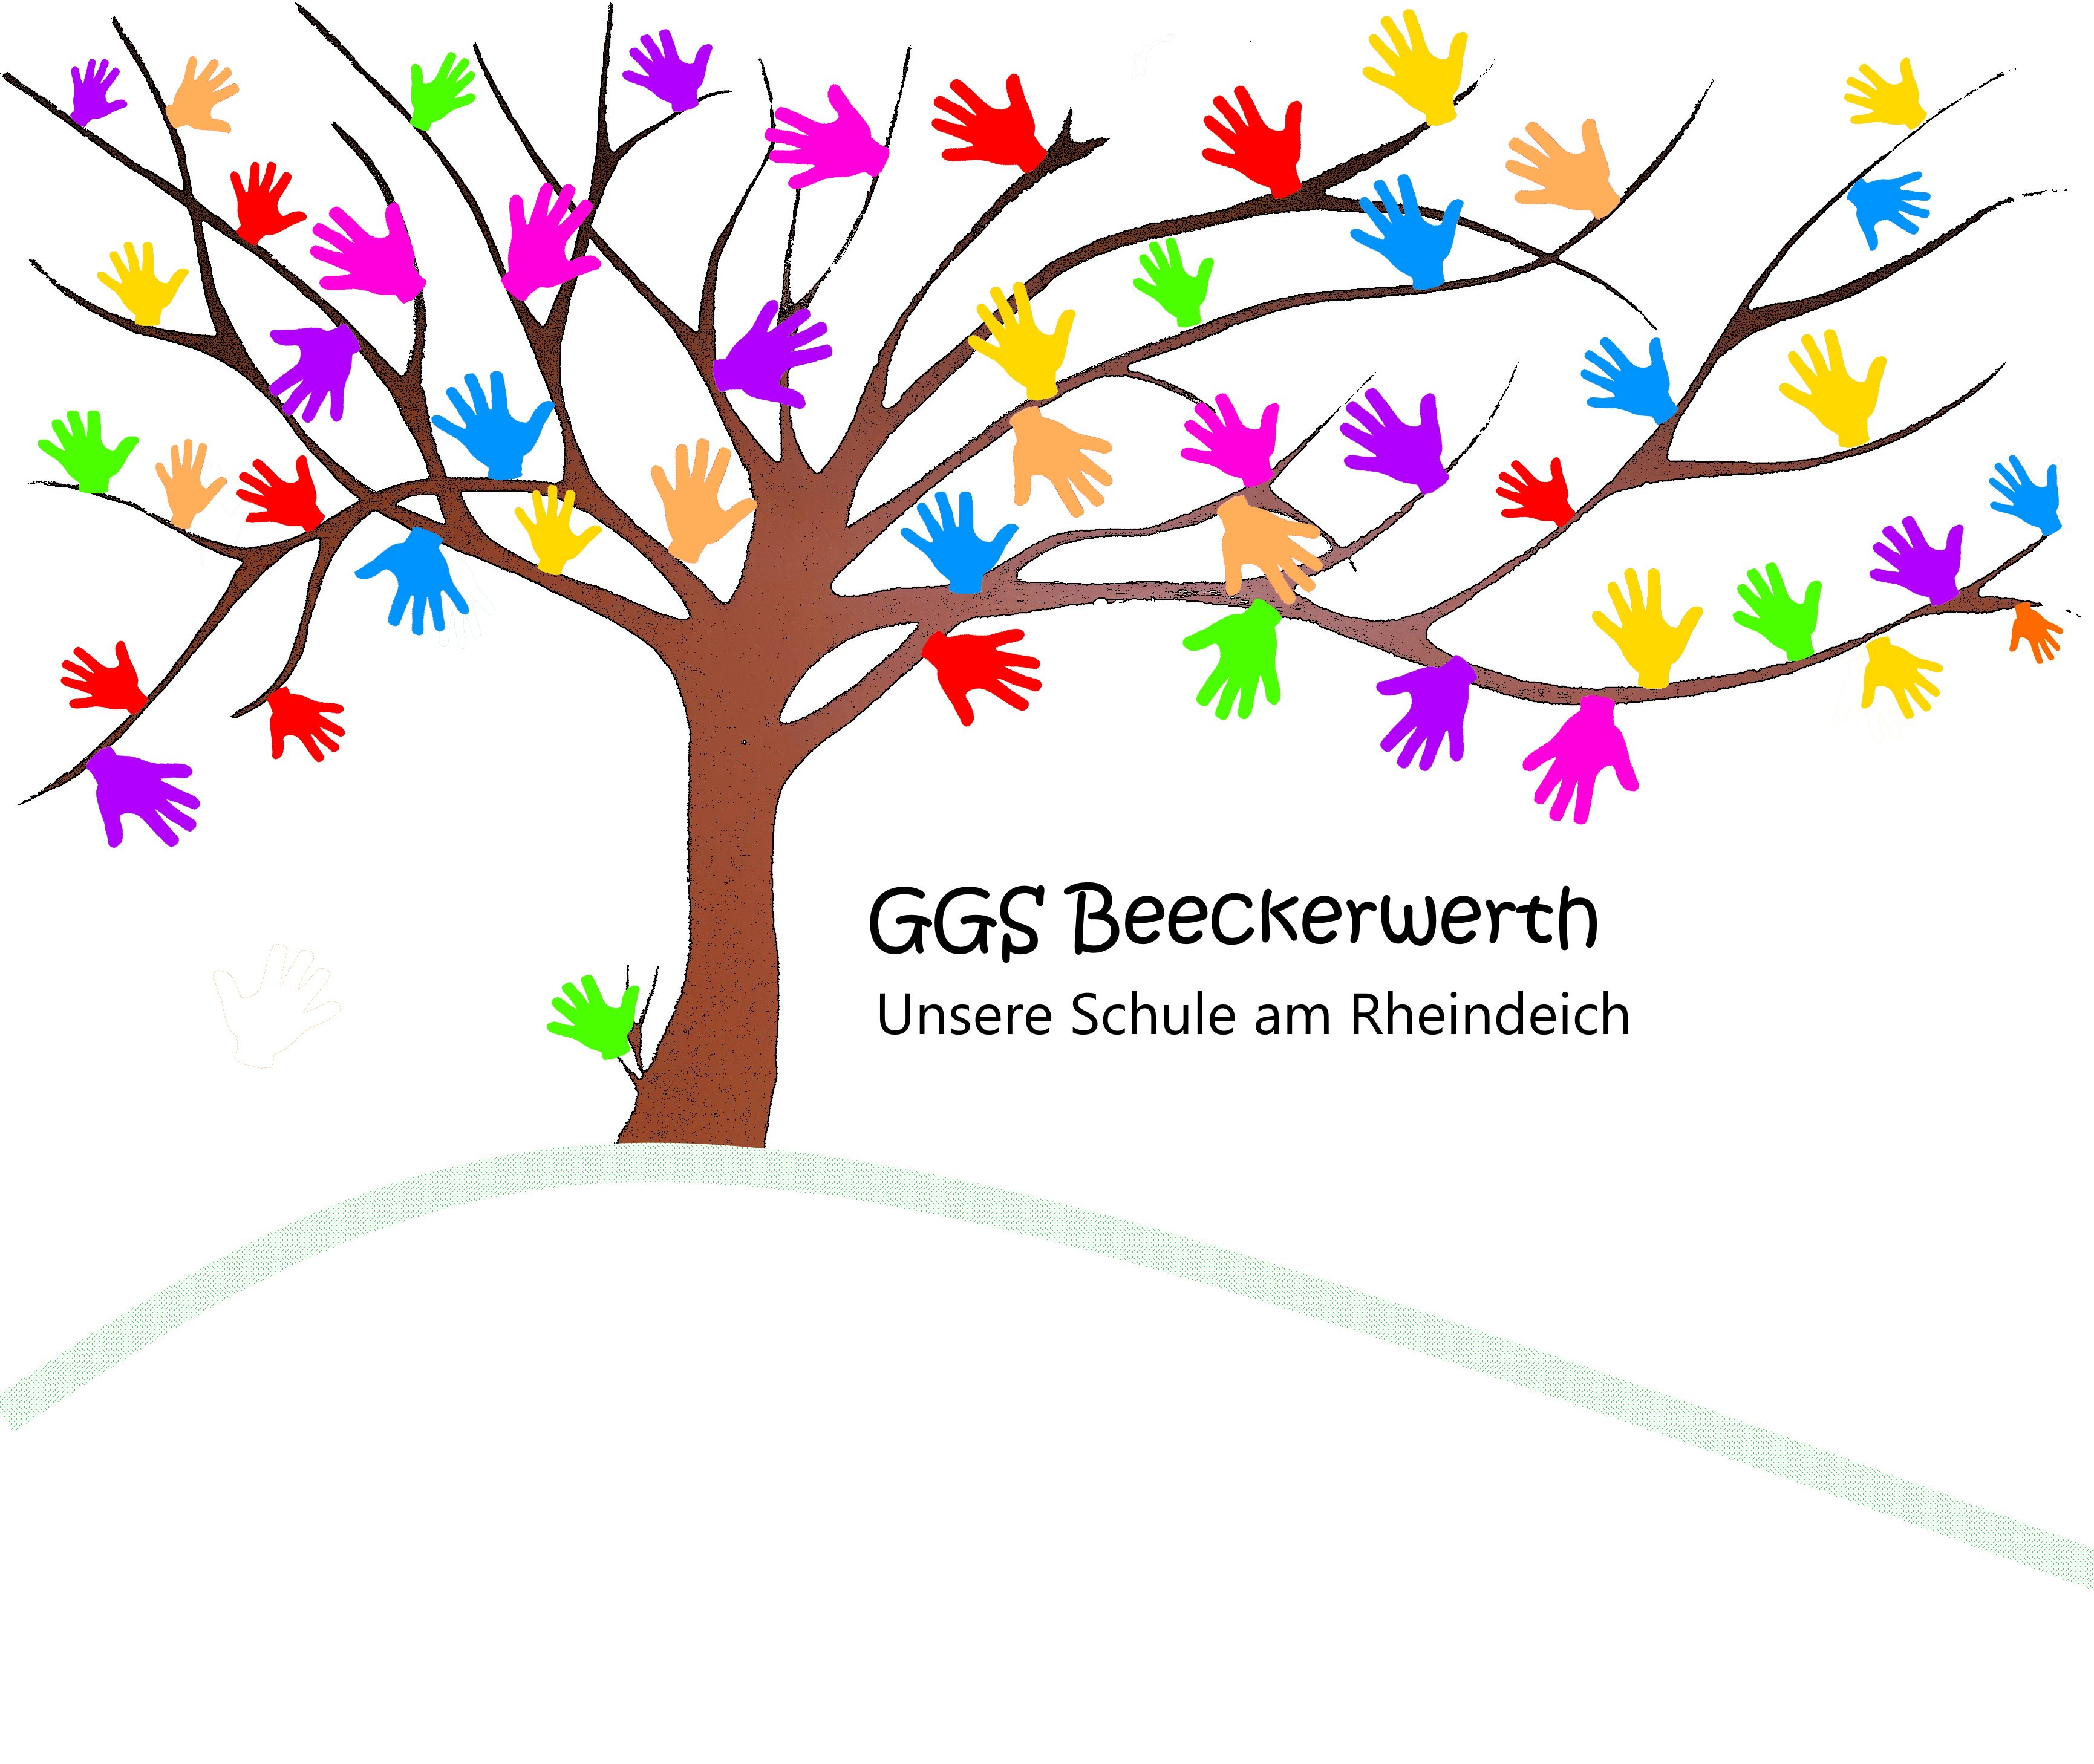 (c) Ggs-beeckerwerth.de